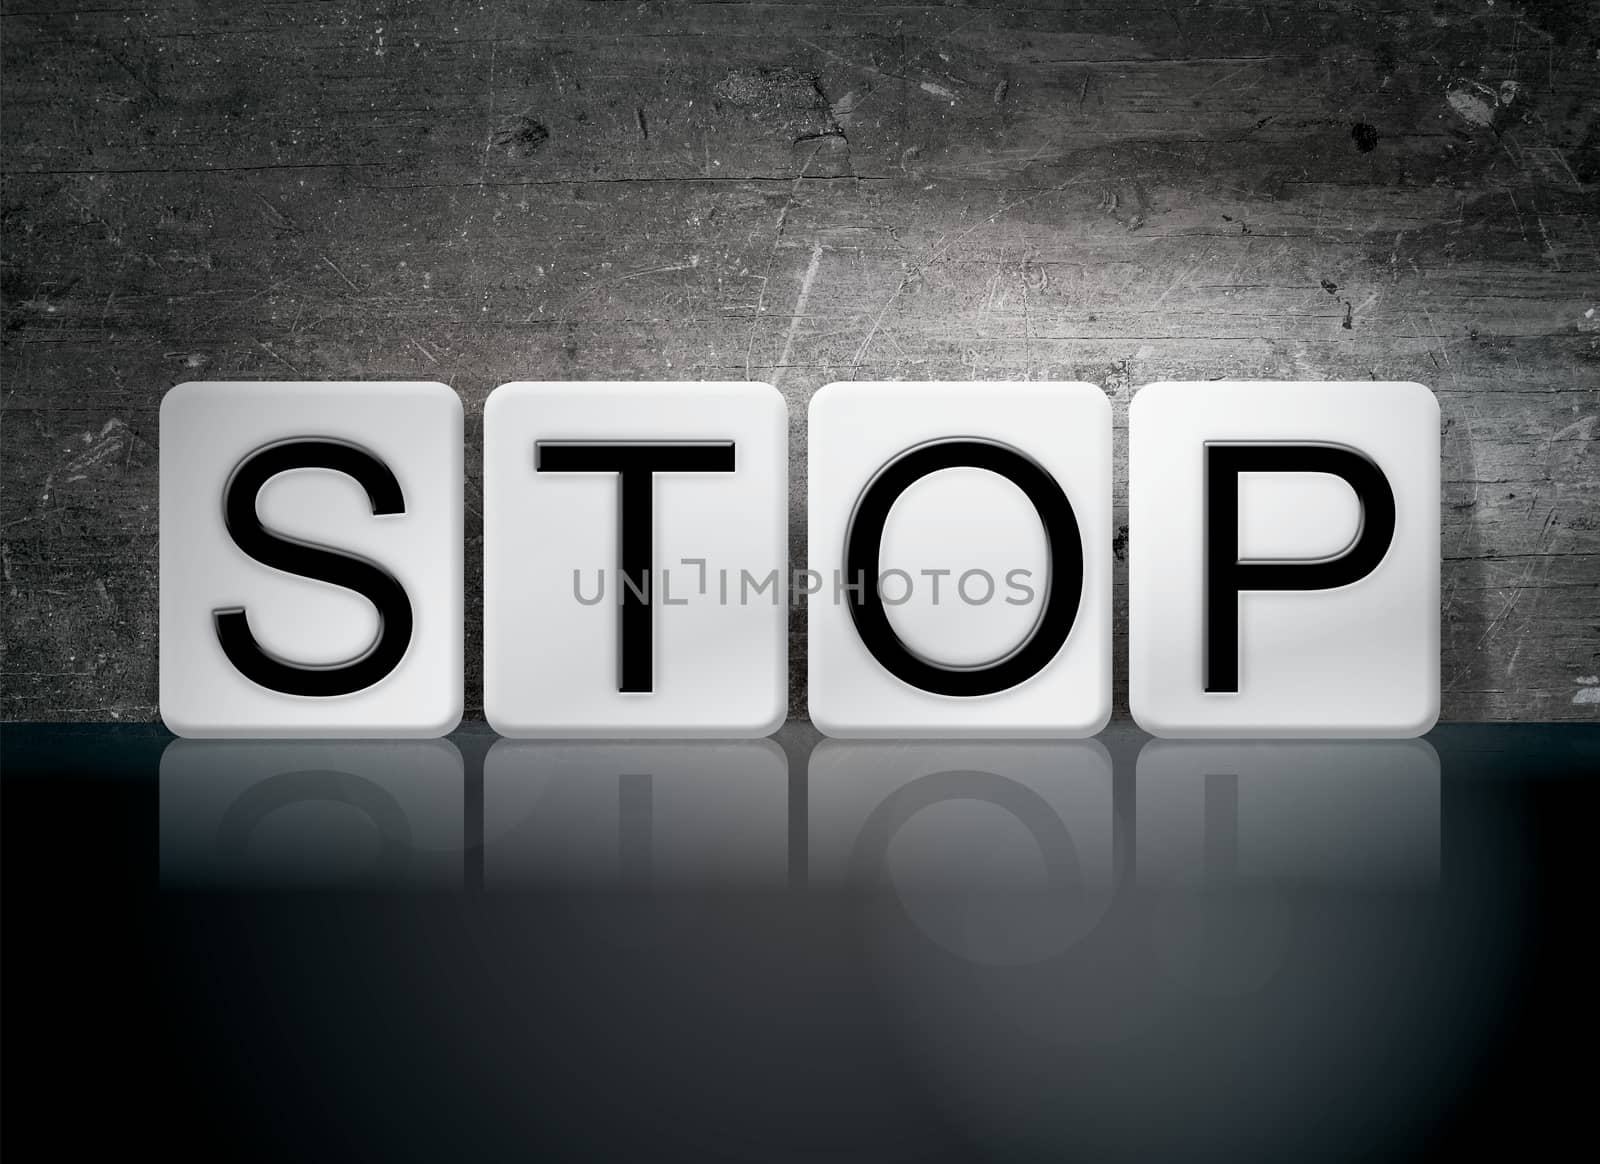 The word "Stop" written in white tiles against a dark vintage grunge background.